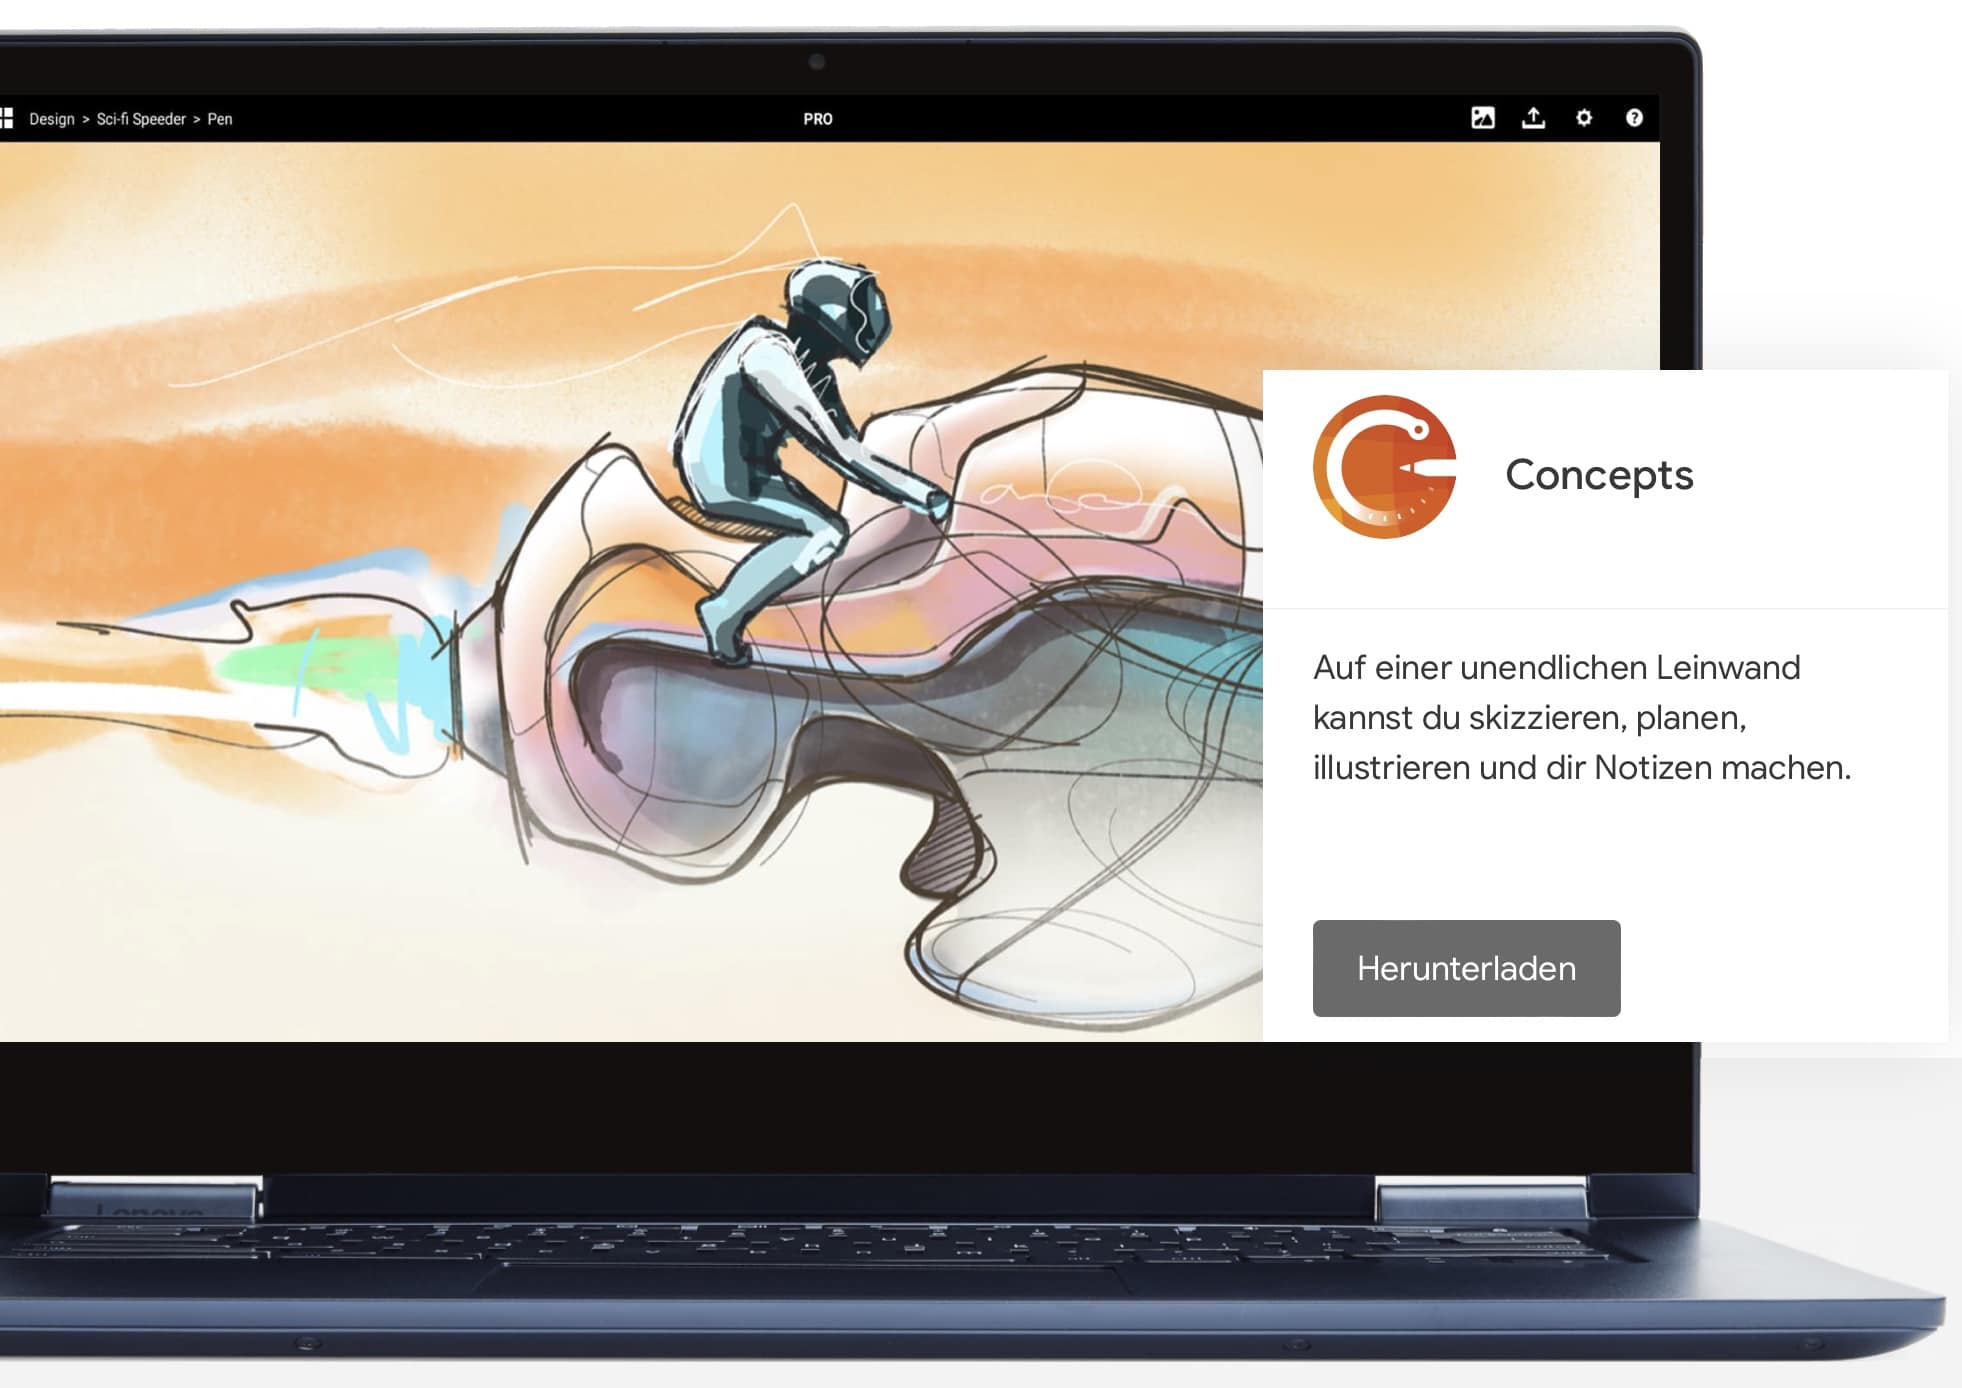 Produktivitaets Apps fuer Chromebooks   Chromebooks von Google 2021 11 09 11 24 07